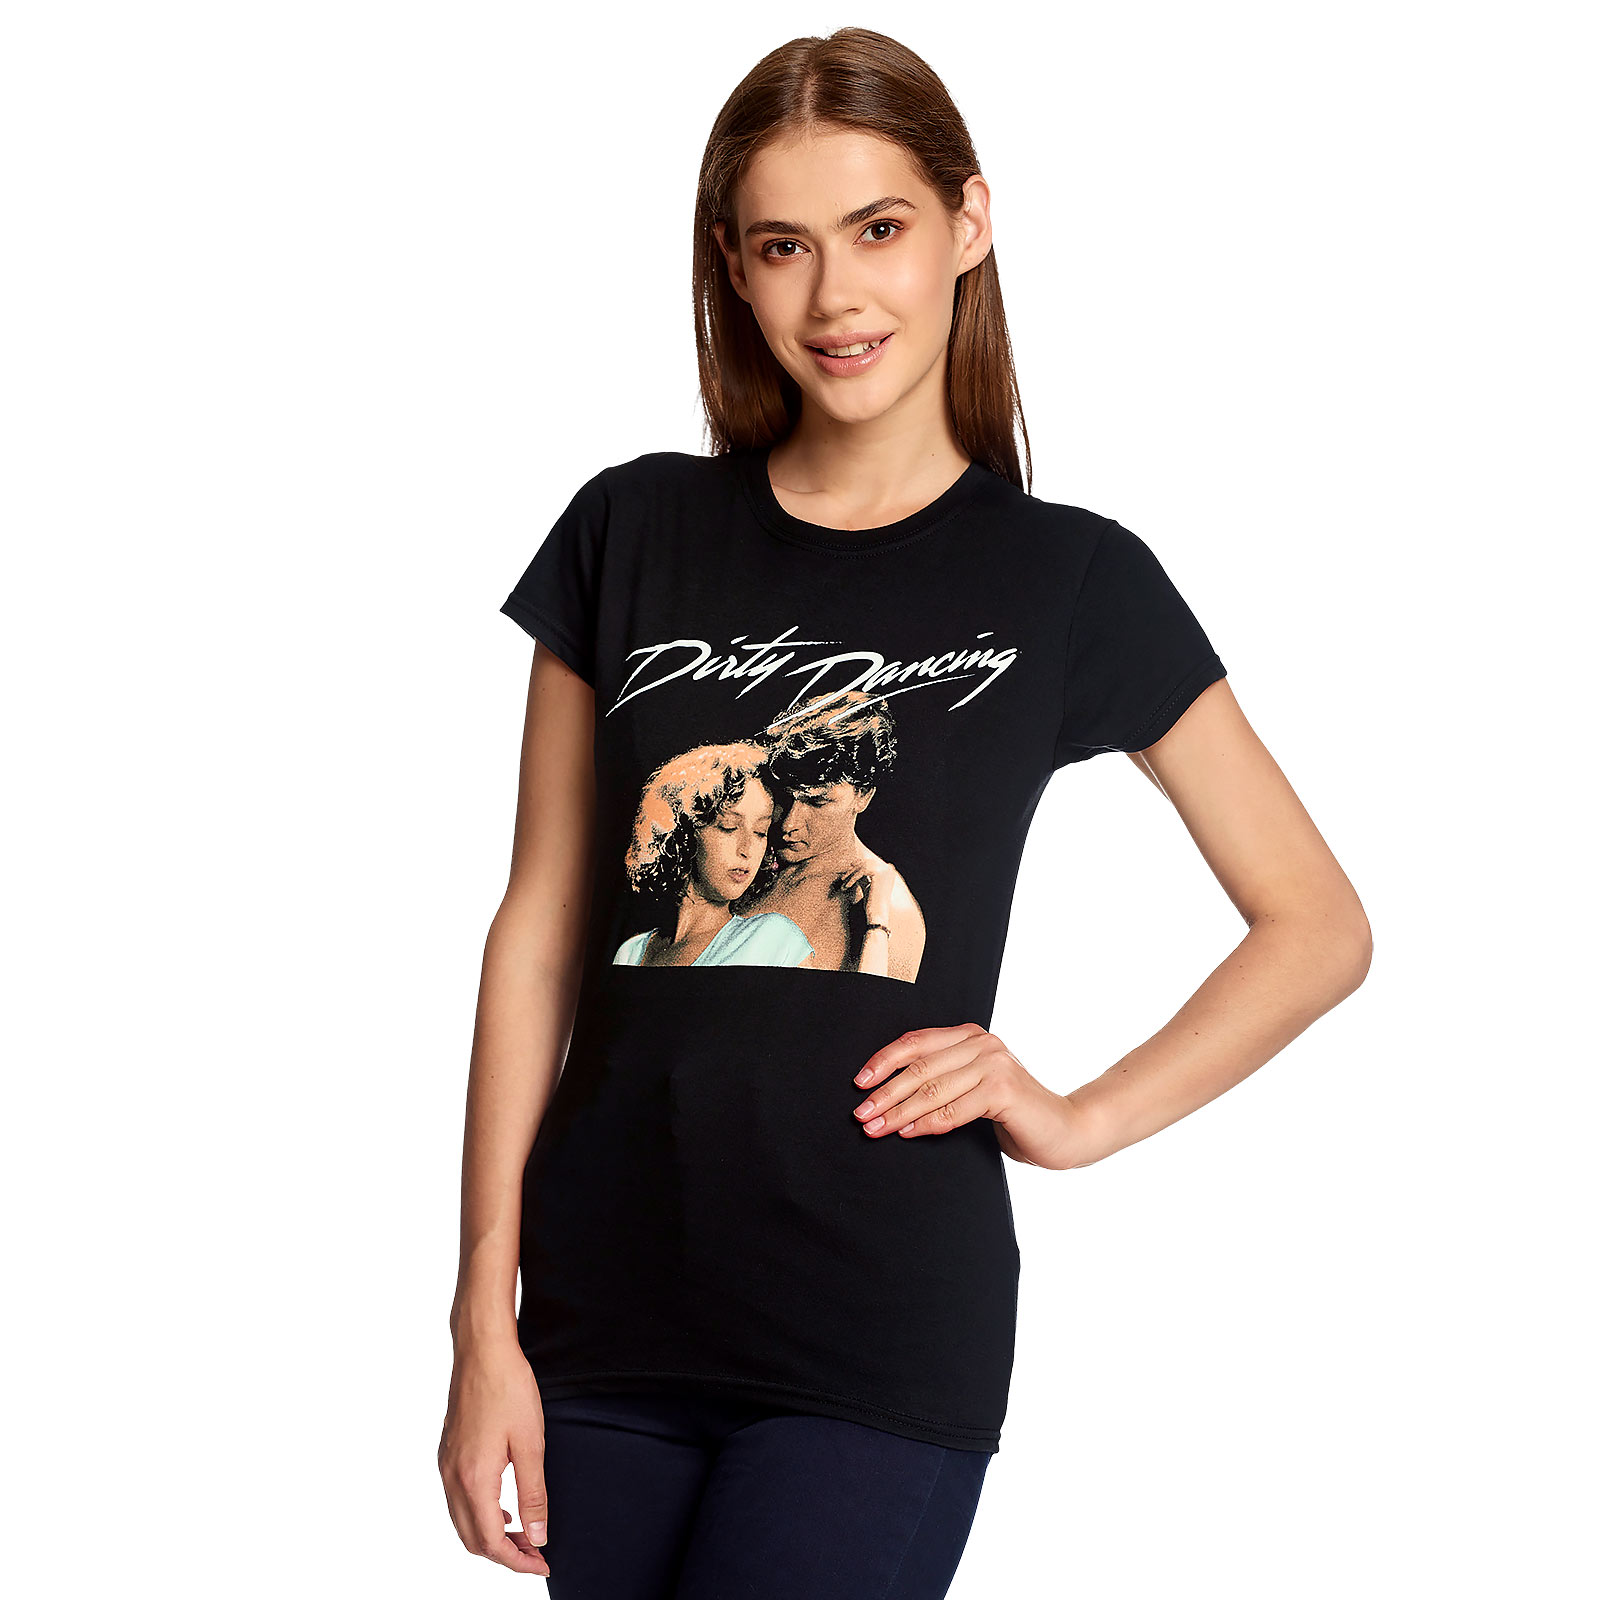 Dirty Dancing - Baby & Johnny T-Shirt Damen schwarz